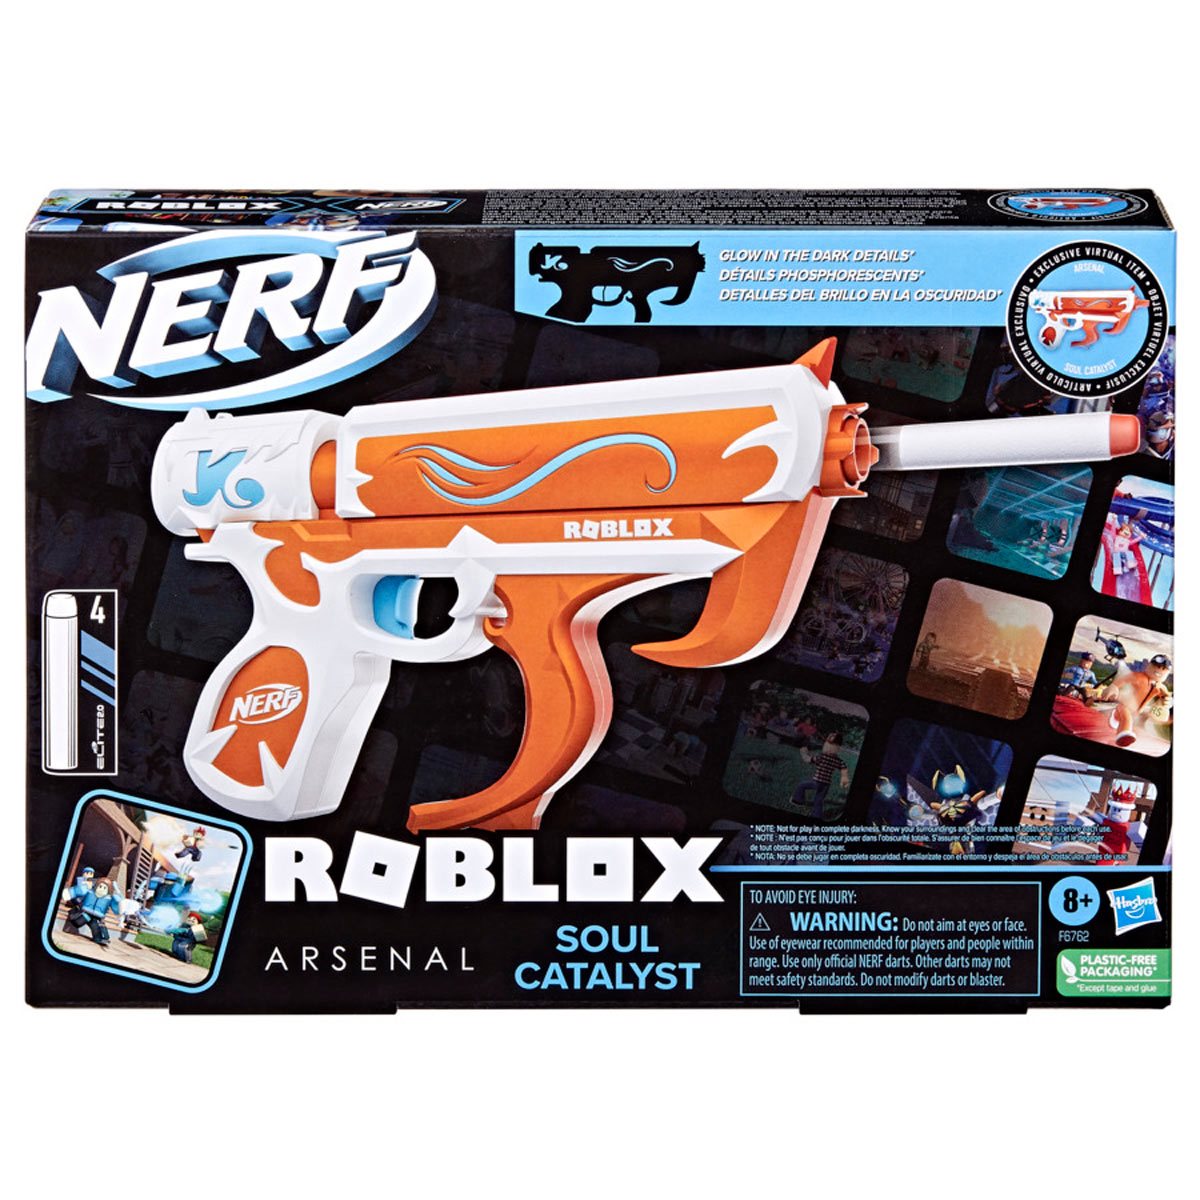 NERF GUN ROBLOX ARSENAL PULSE LASER NEW IN BOX VIRTUAL ITEM GAME